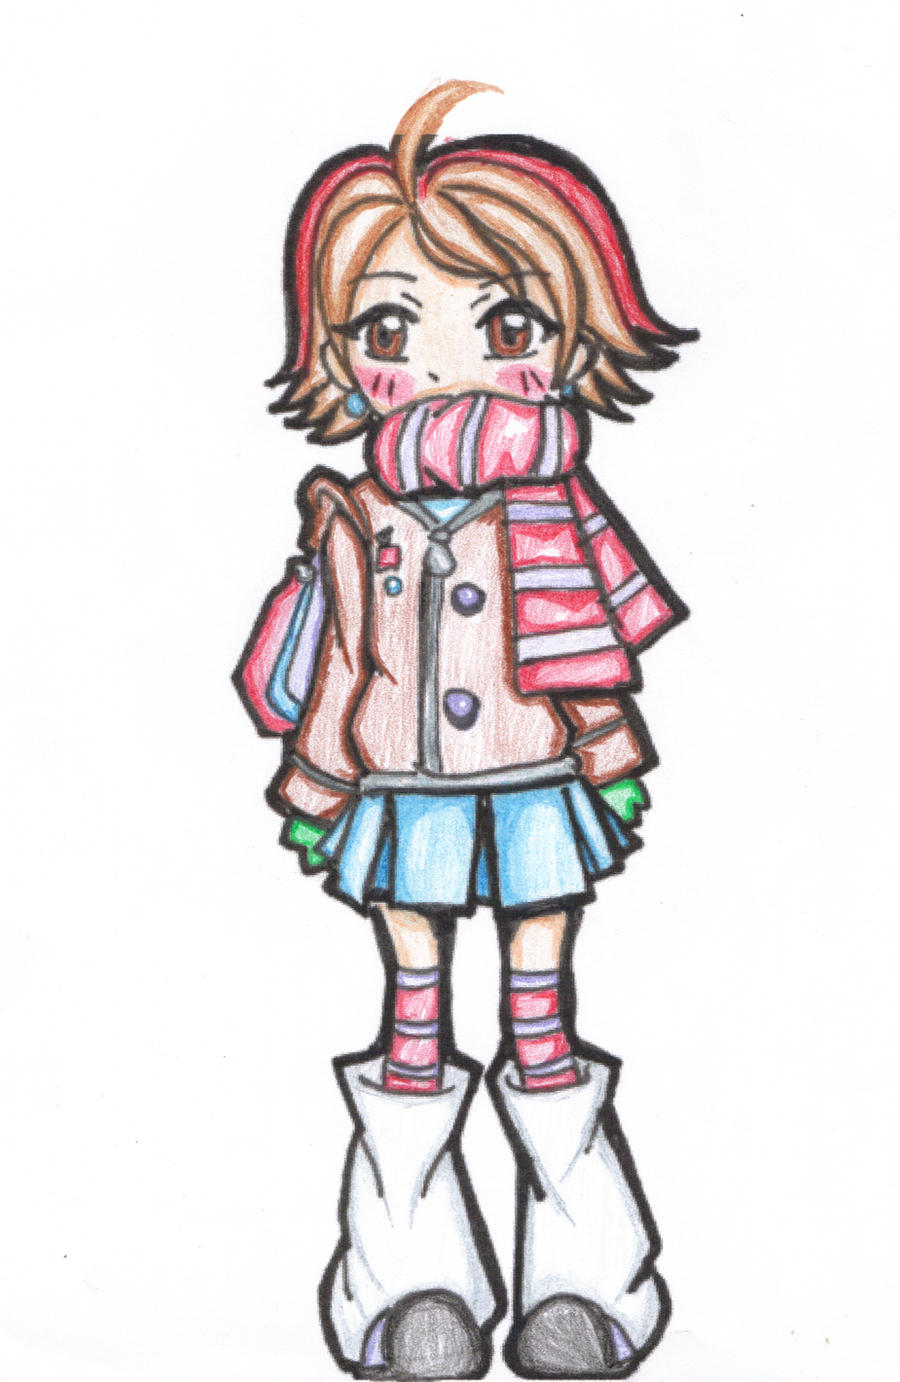 School girl doodle colored